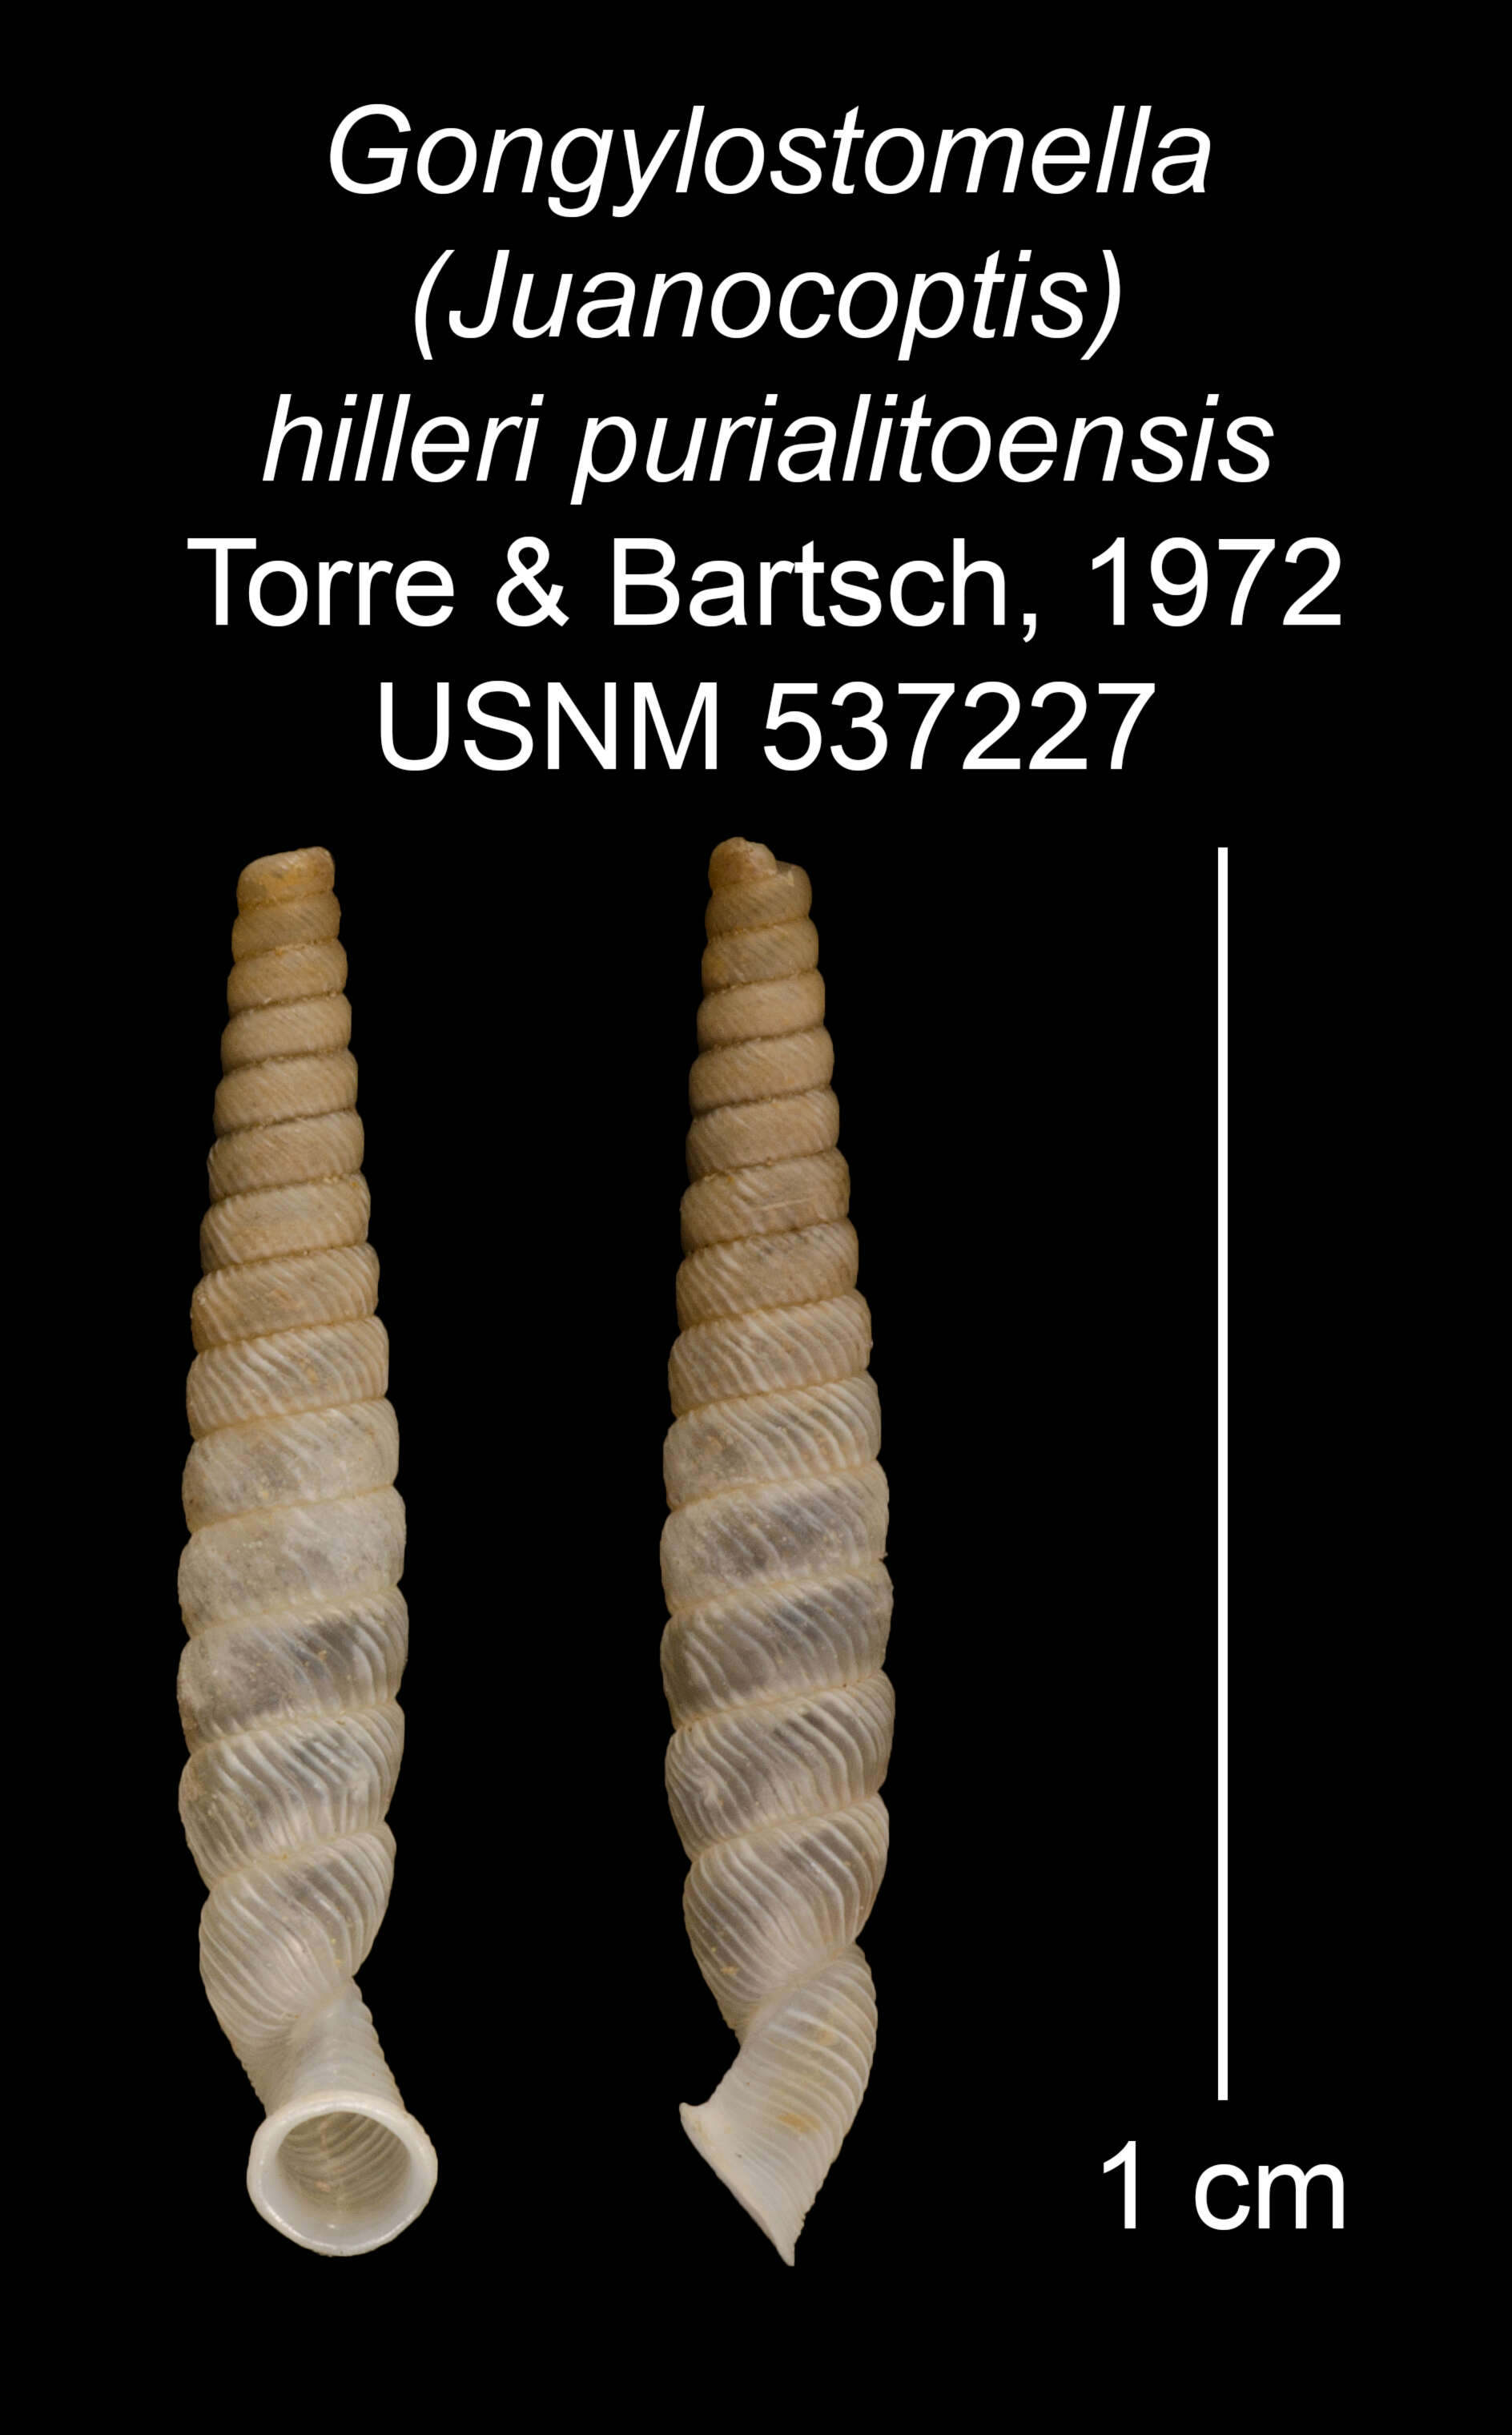 Image of Gongylostomella hilleri puralitoensis C. Torre & Bartsch 1972